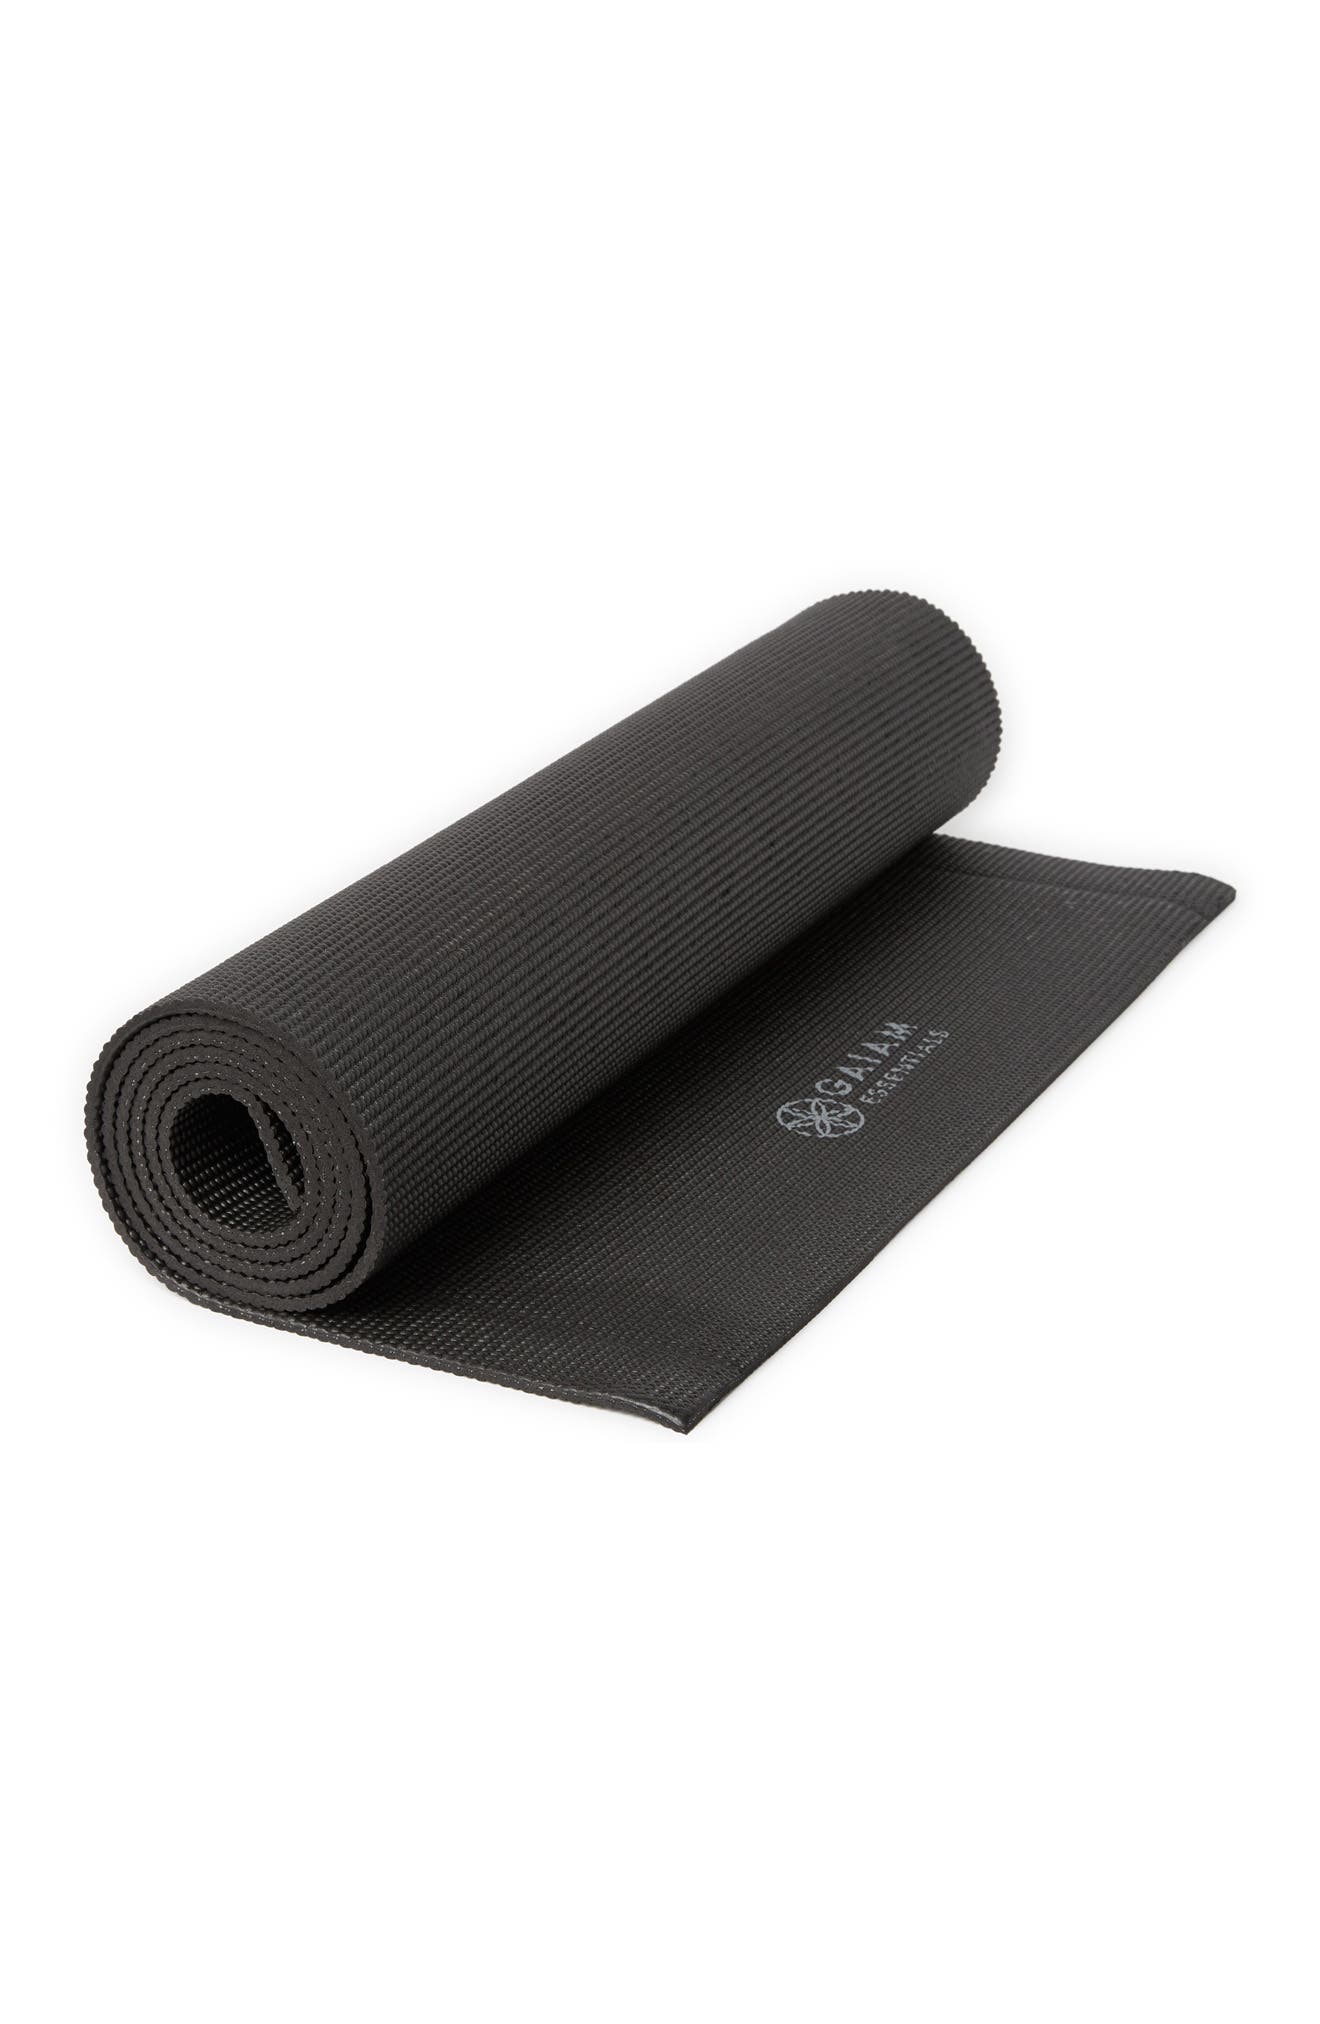 Gaiam 6mm Yoga Mat In Black